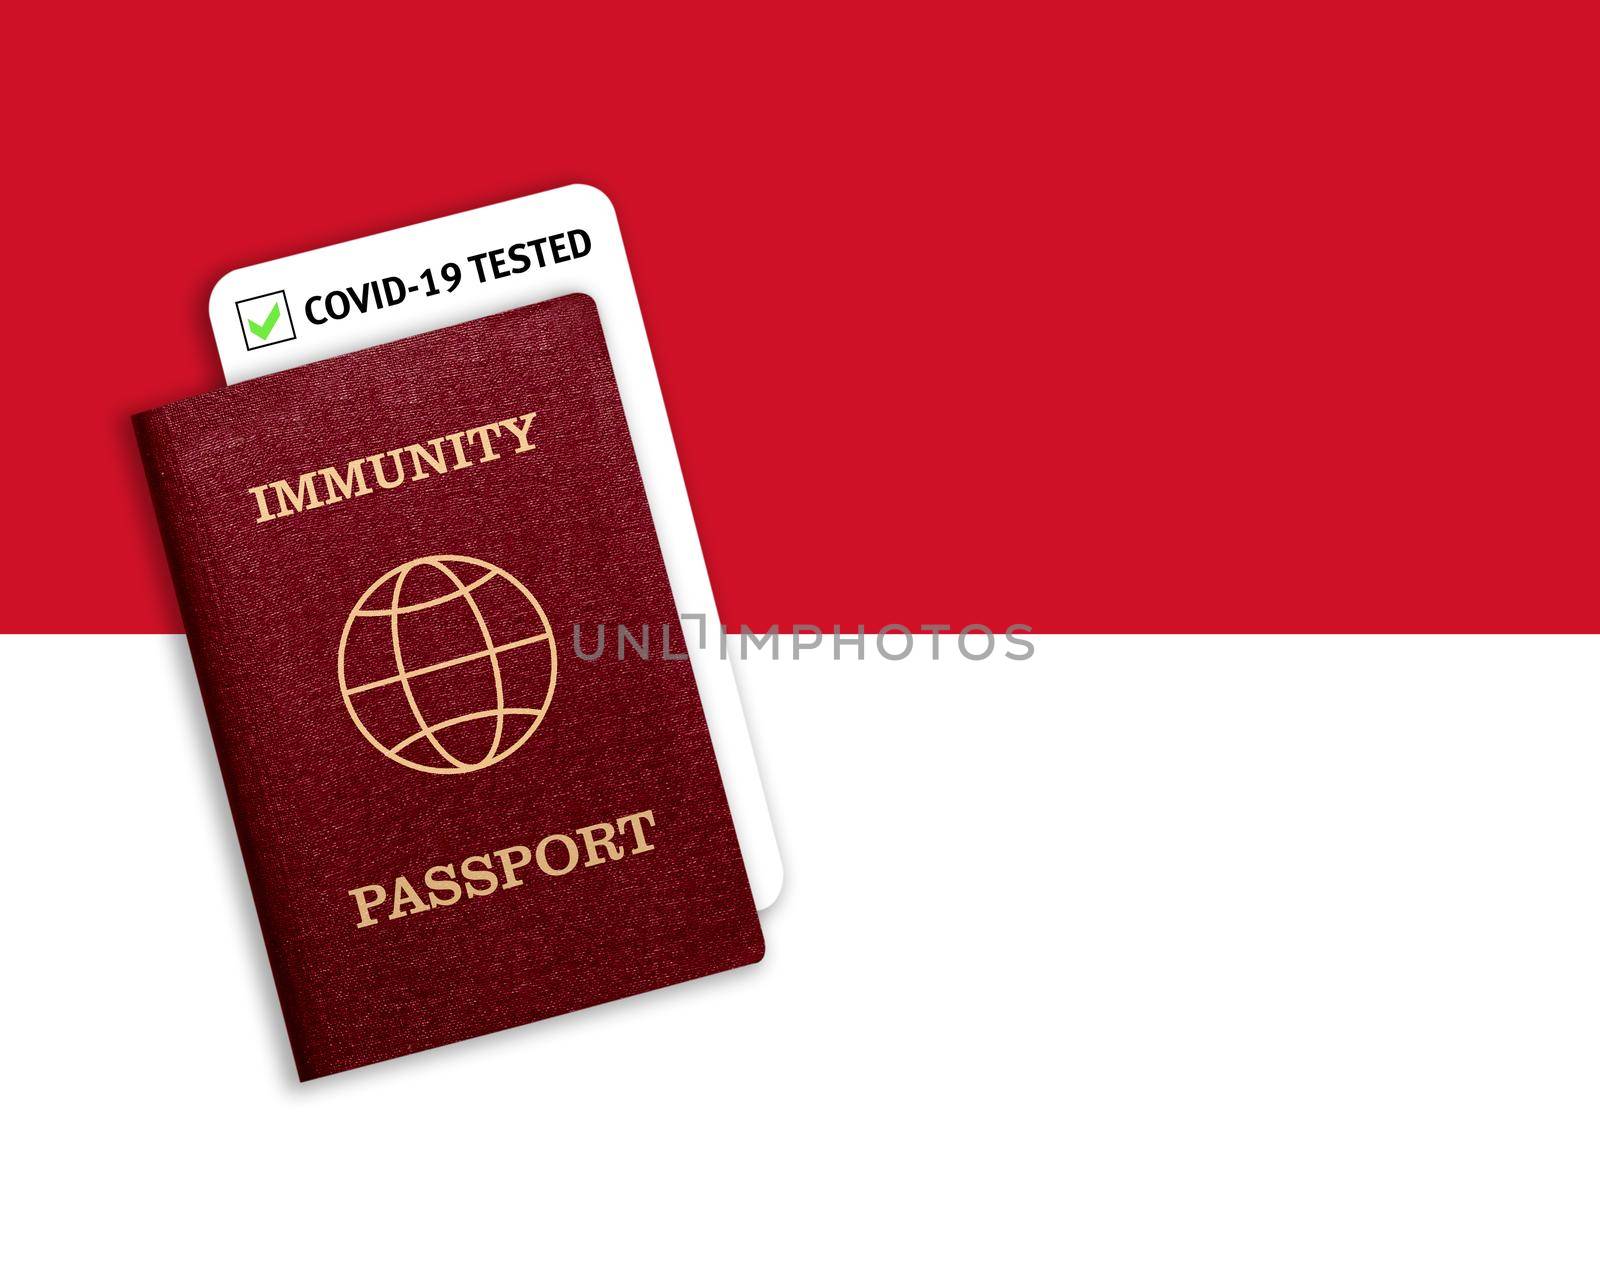 Immunity passport and test result for COVID-19 on flag of monaco. by galinasharapova